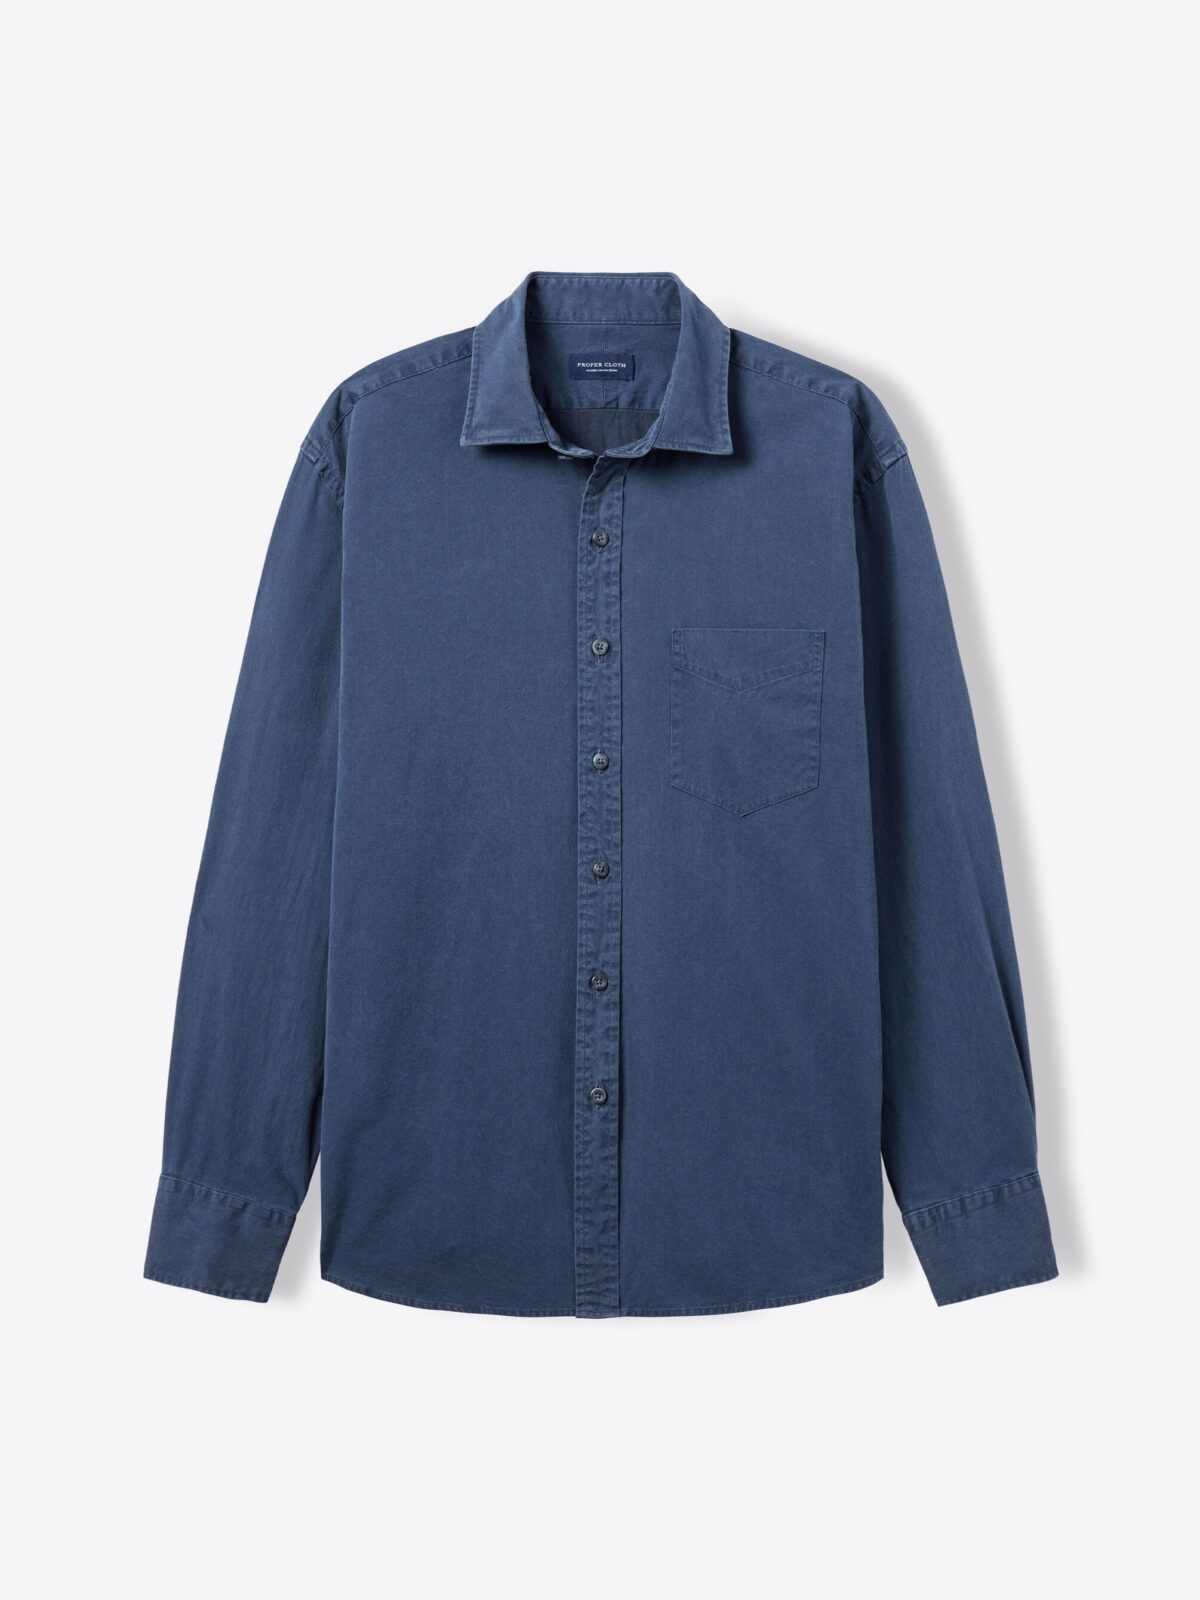 Albiate Washed Lightweight Slate Blue Denim Shirt by Proper Cloth